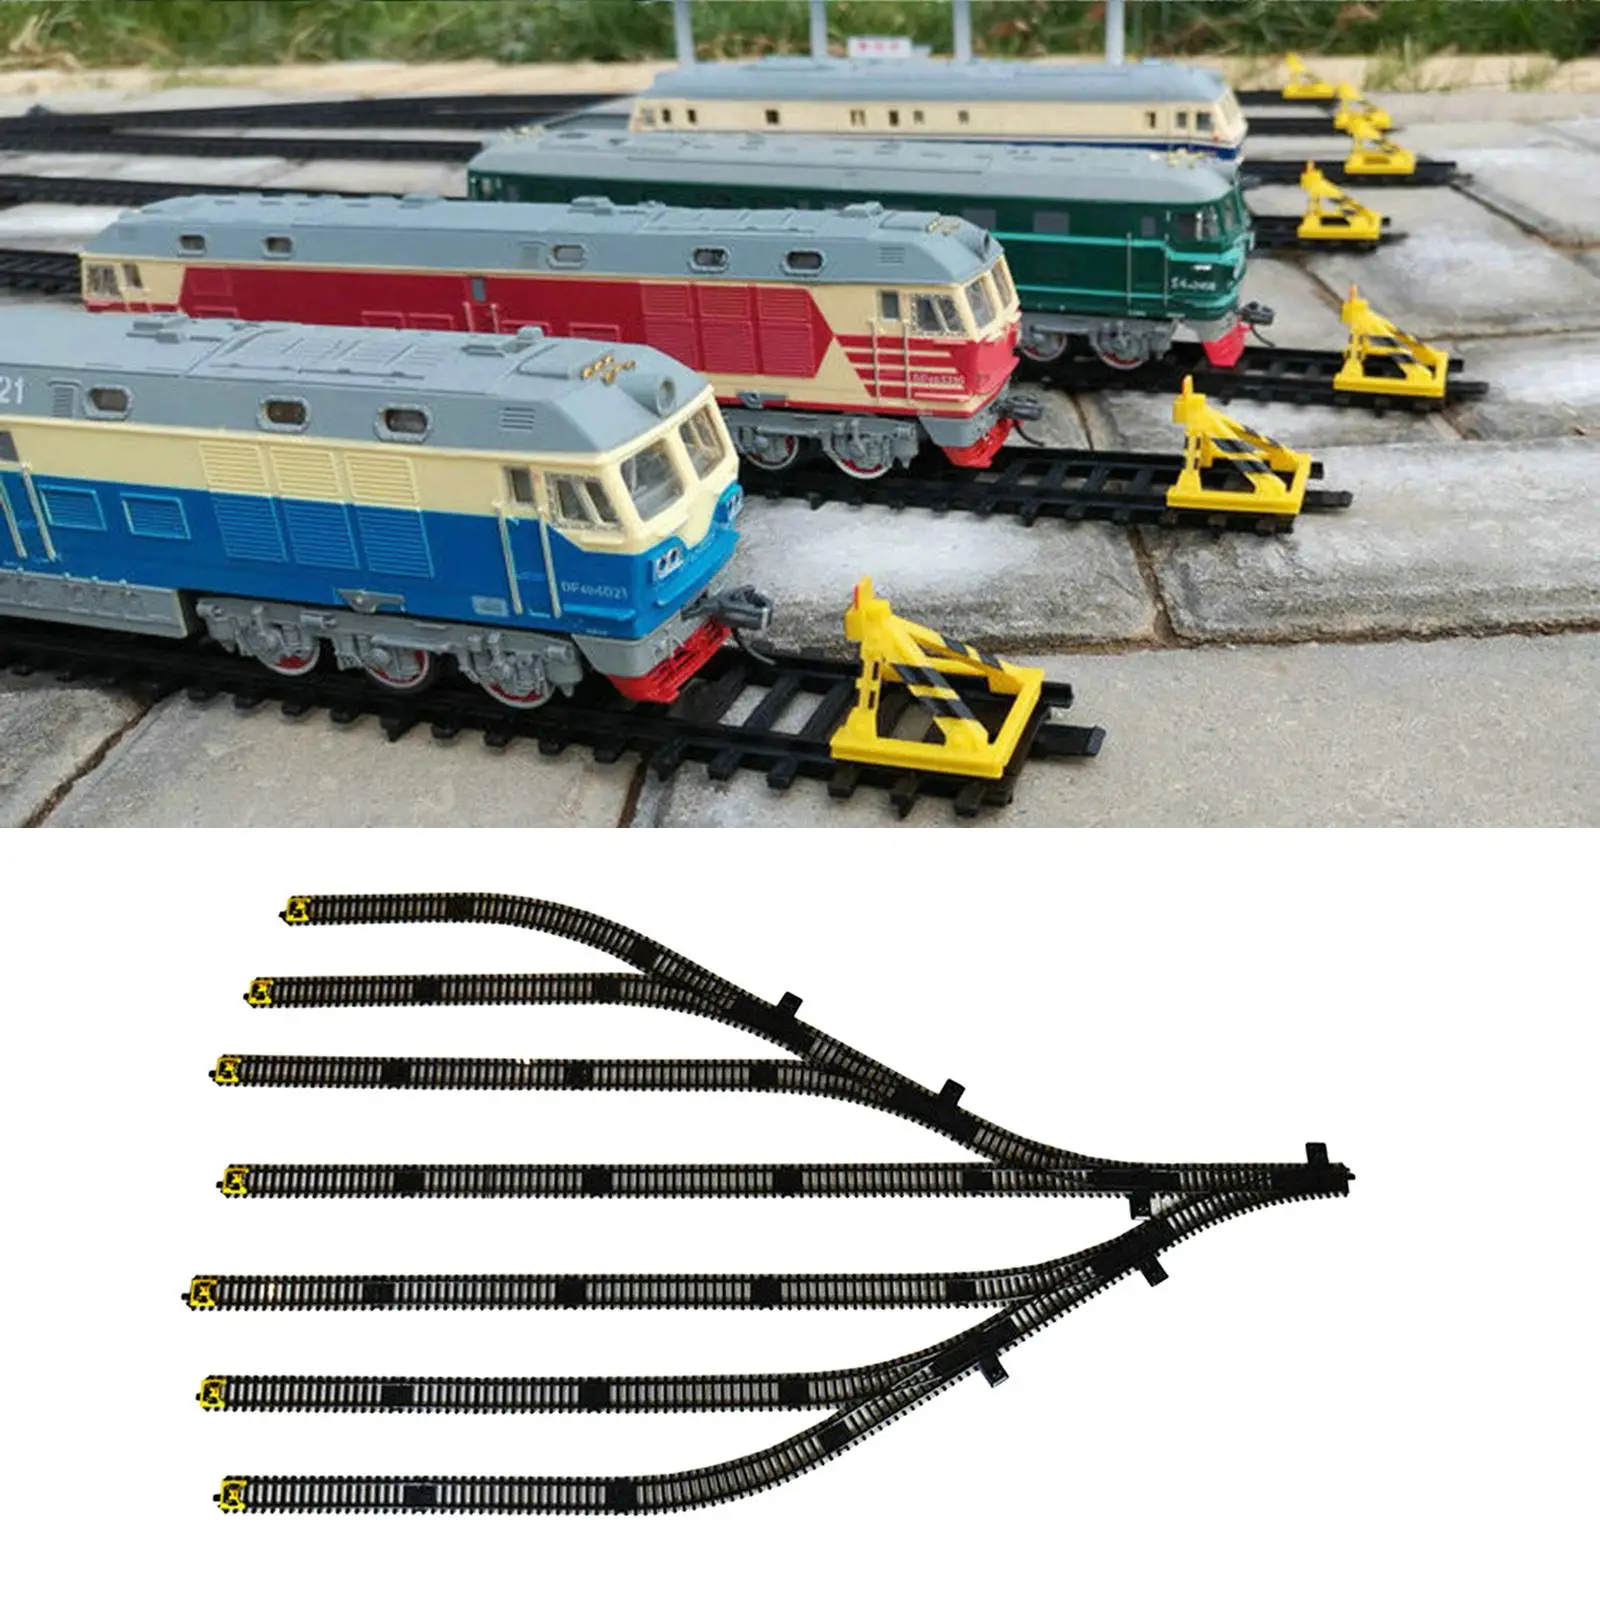 34Pcs Model Railway Track 1/87 for Train Railway Layout Architecture Model